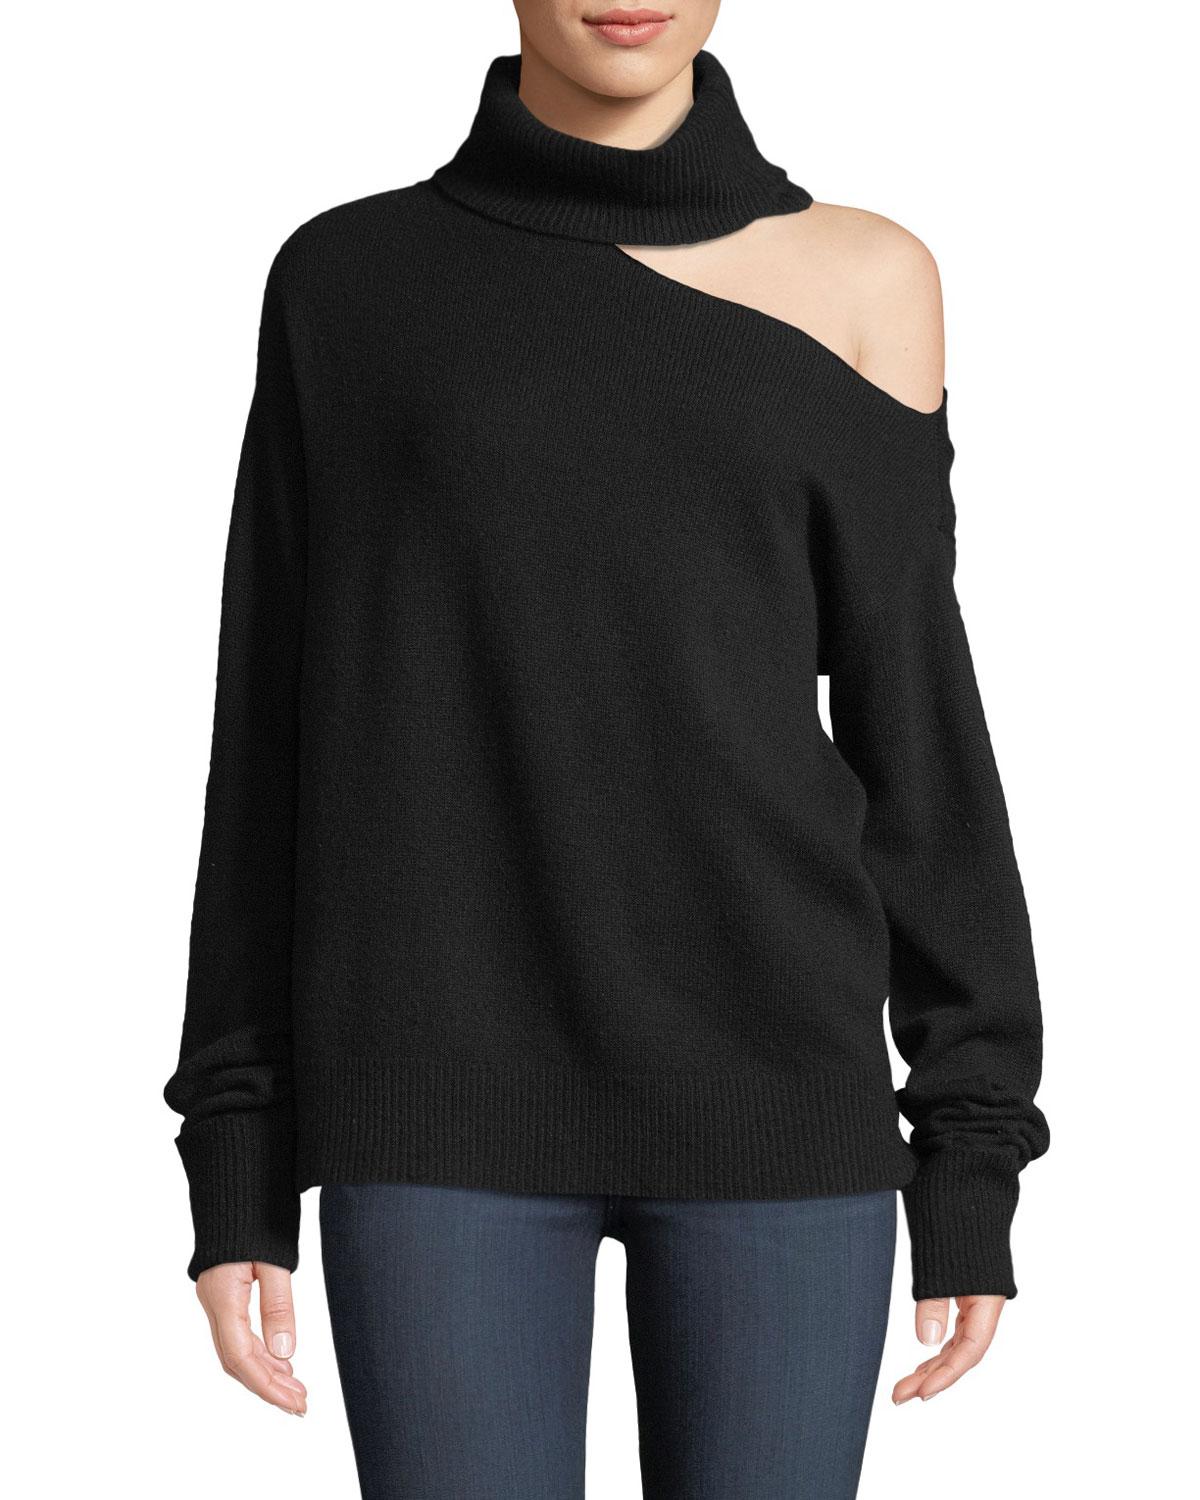 PAIGE Raundi Cold-shoulder Turtleneck Wool-blend Sweater in Black - Lyst